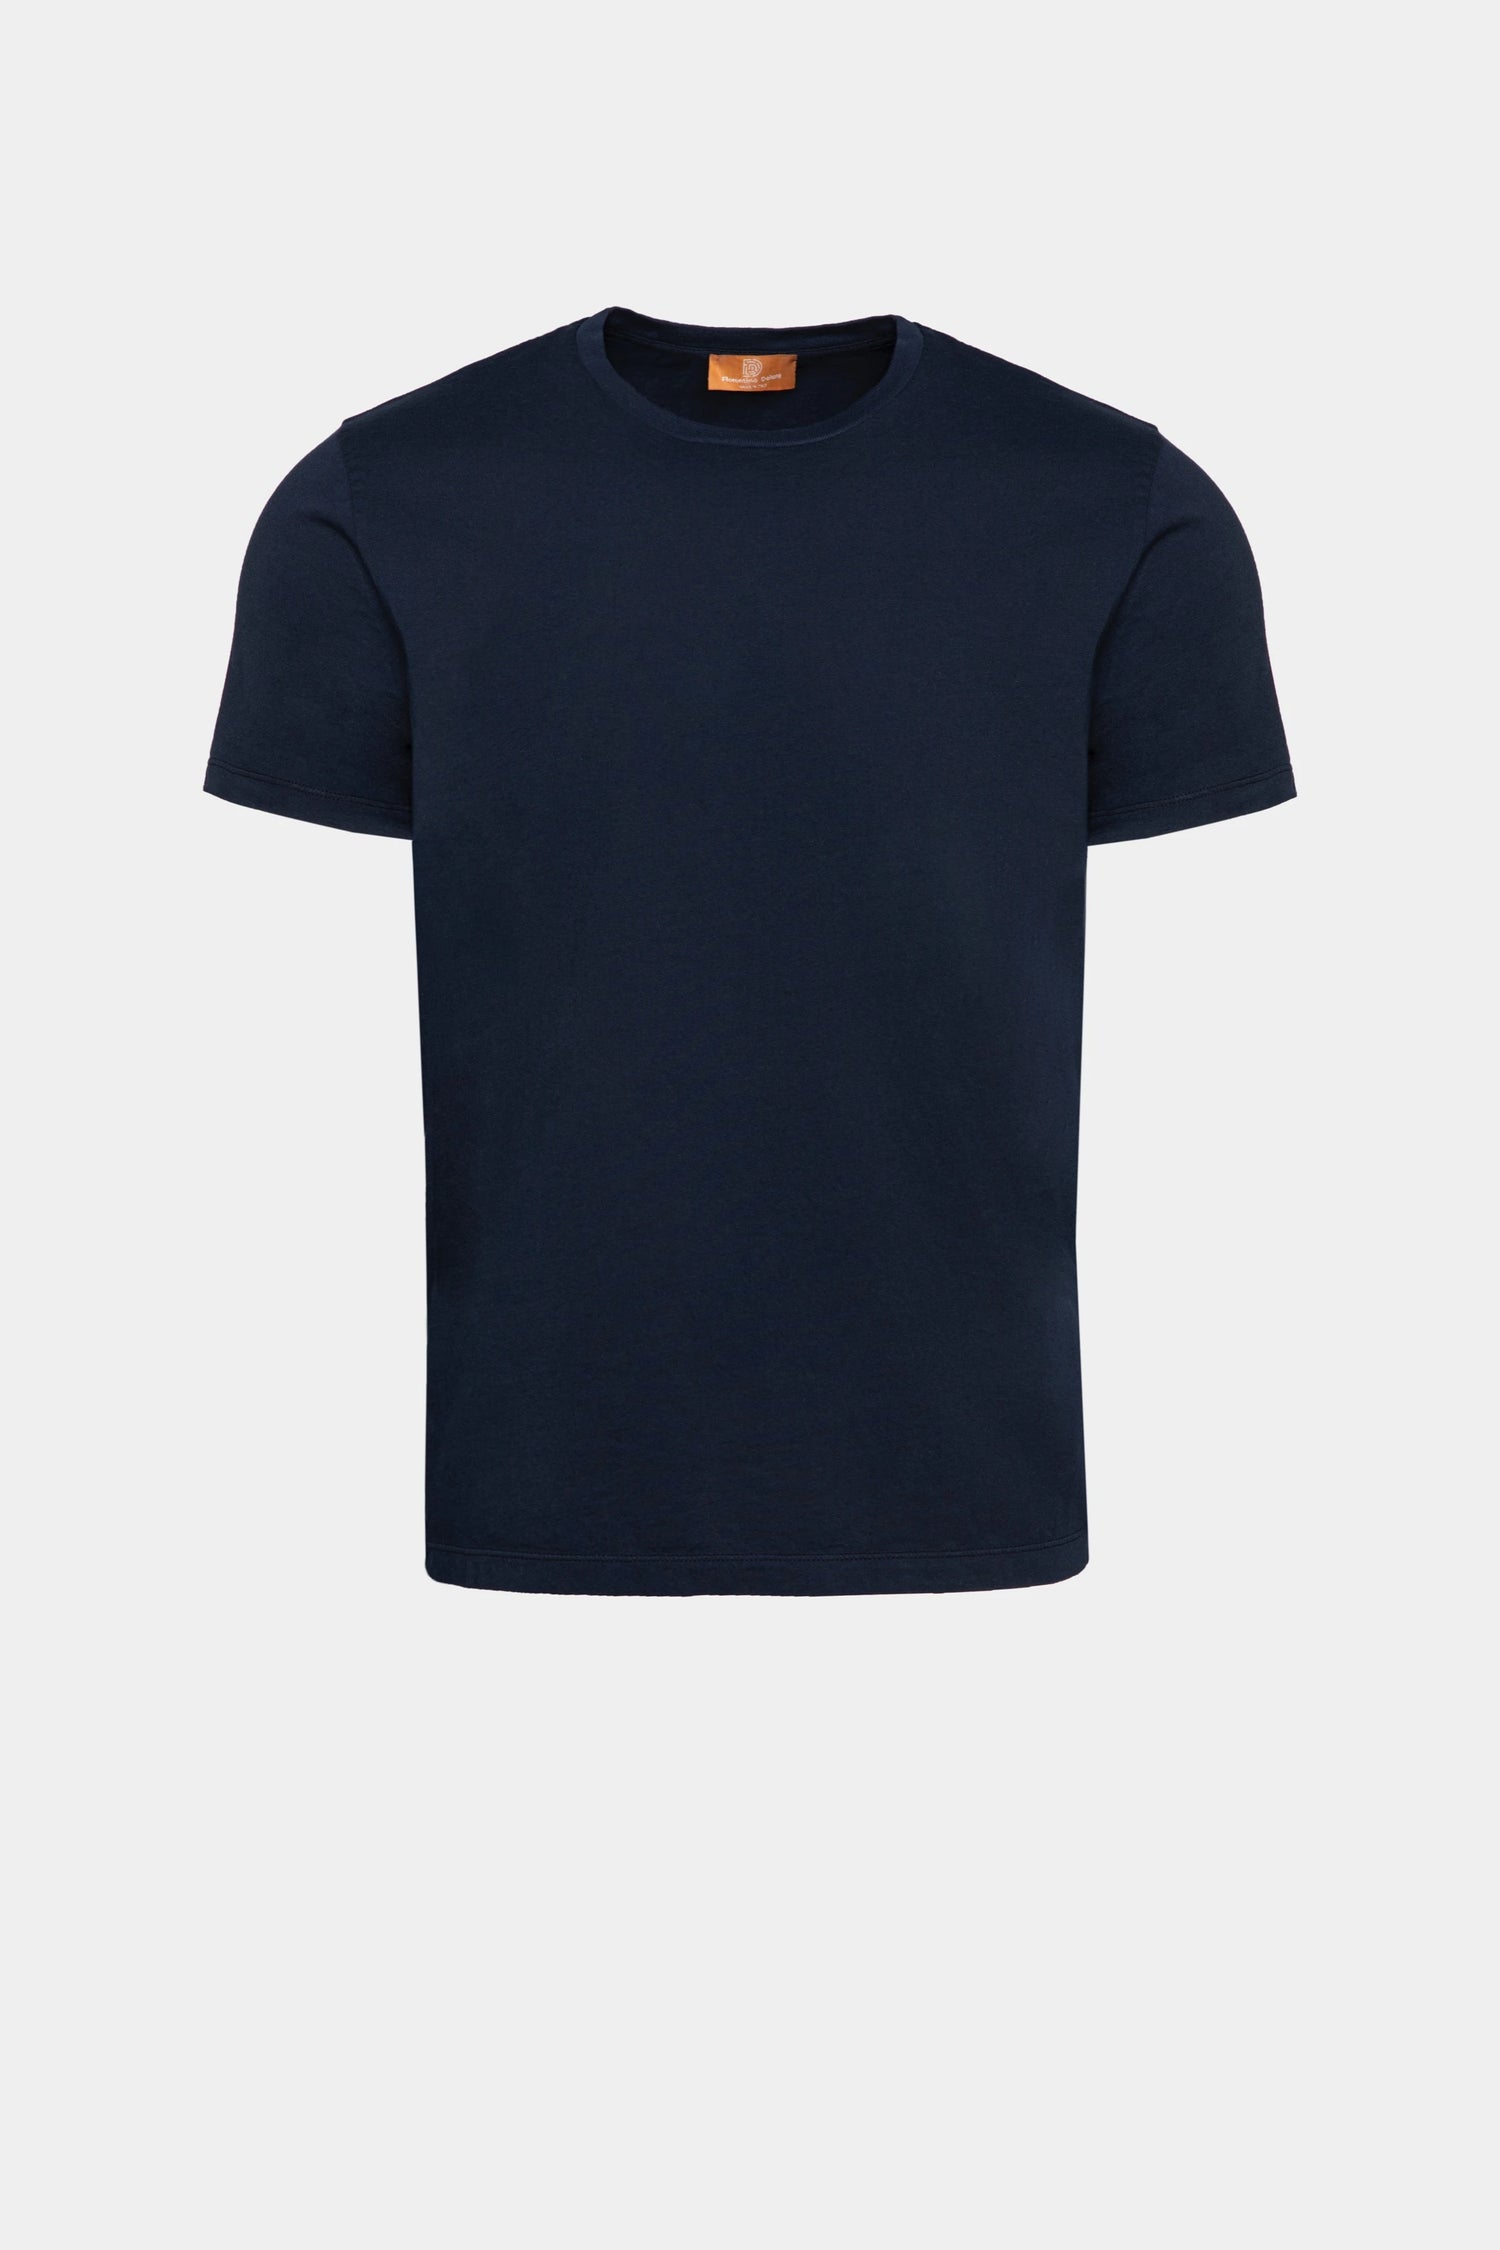 Navy Cotton T-Shirt Menswear T-Shirts